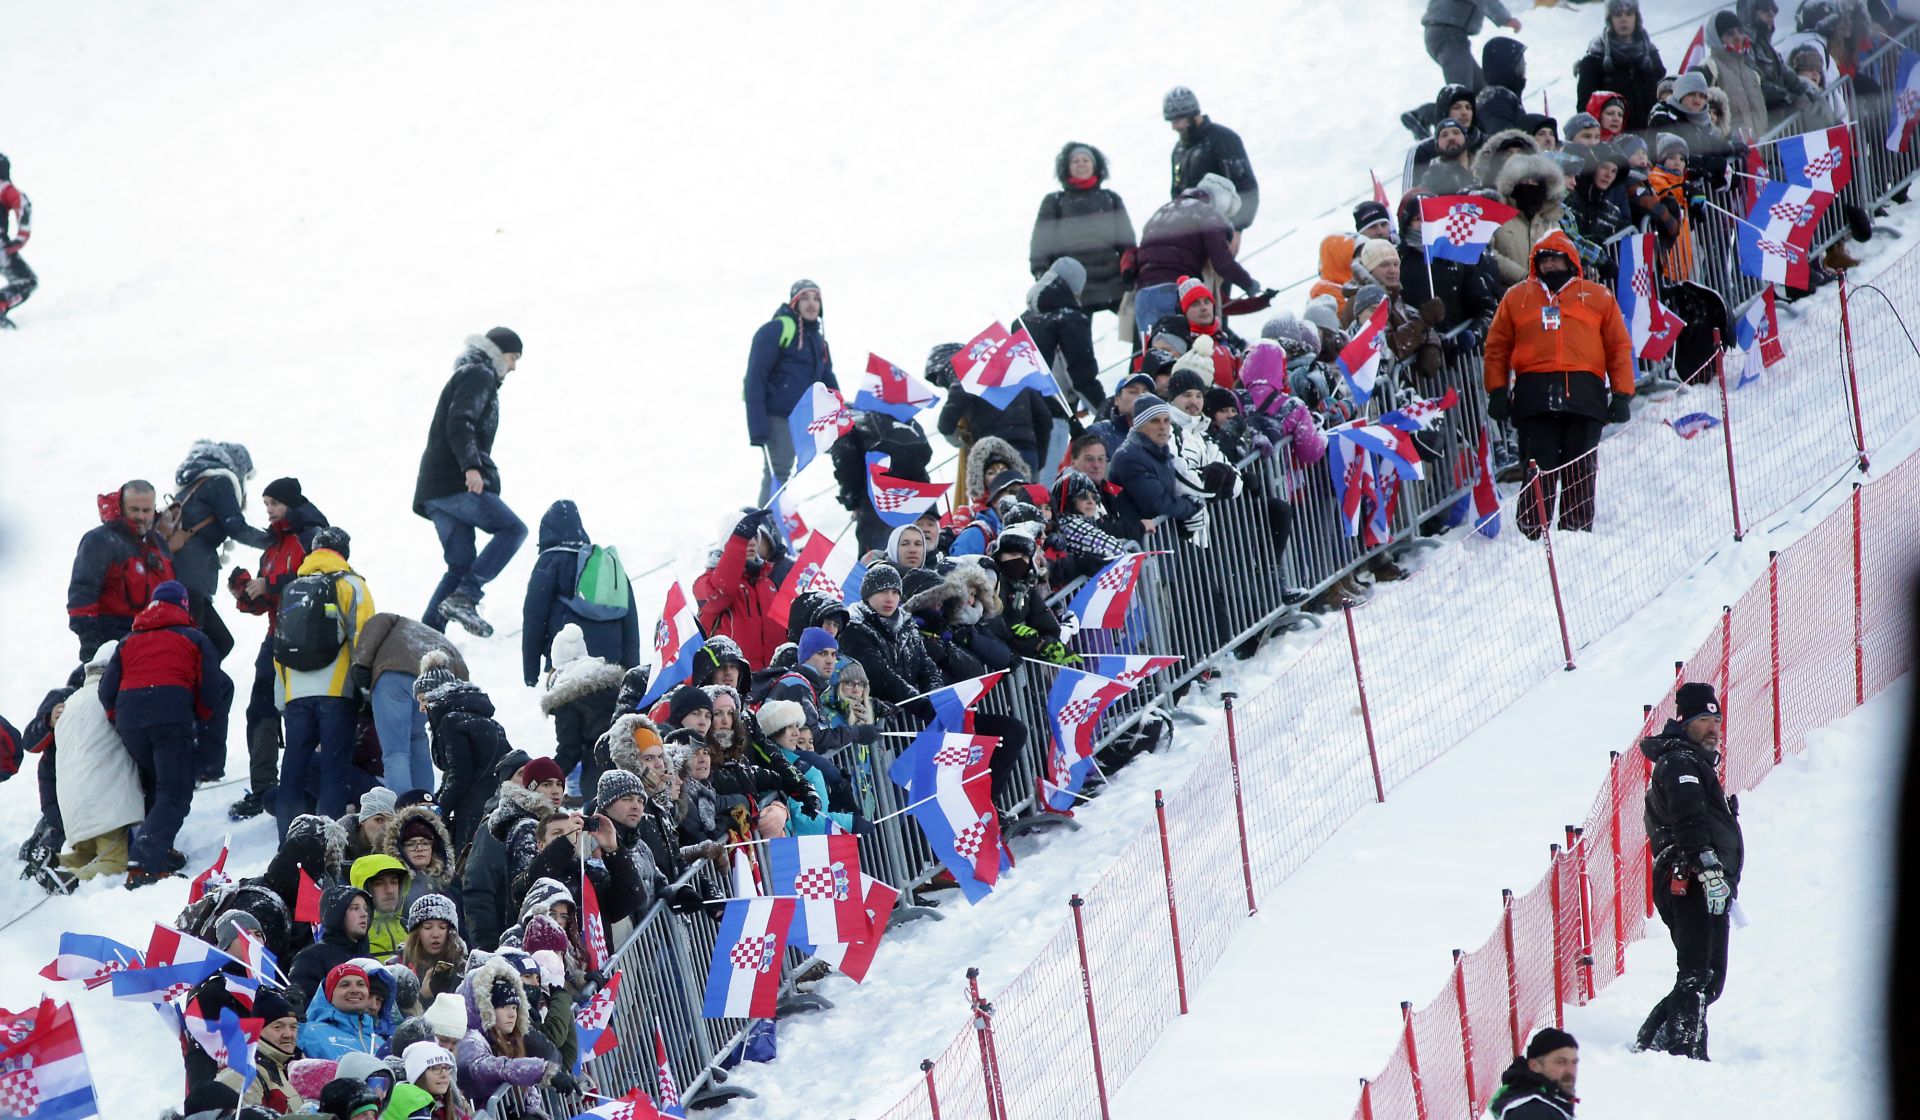 05.01.2017., Sljeme, Zagreb - Prva voznja muske slalomske utrke Audi FIS Svjetskog skijaskog kupa Snow Queen Trophy. Photo: Luka Stanzl/PIXSELL